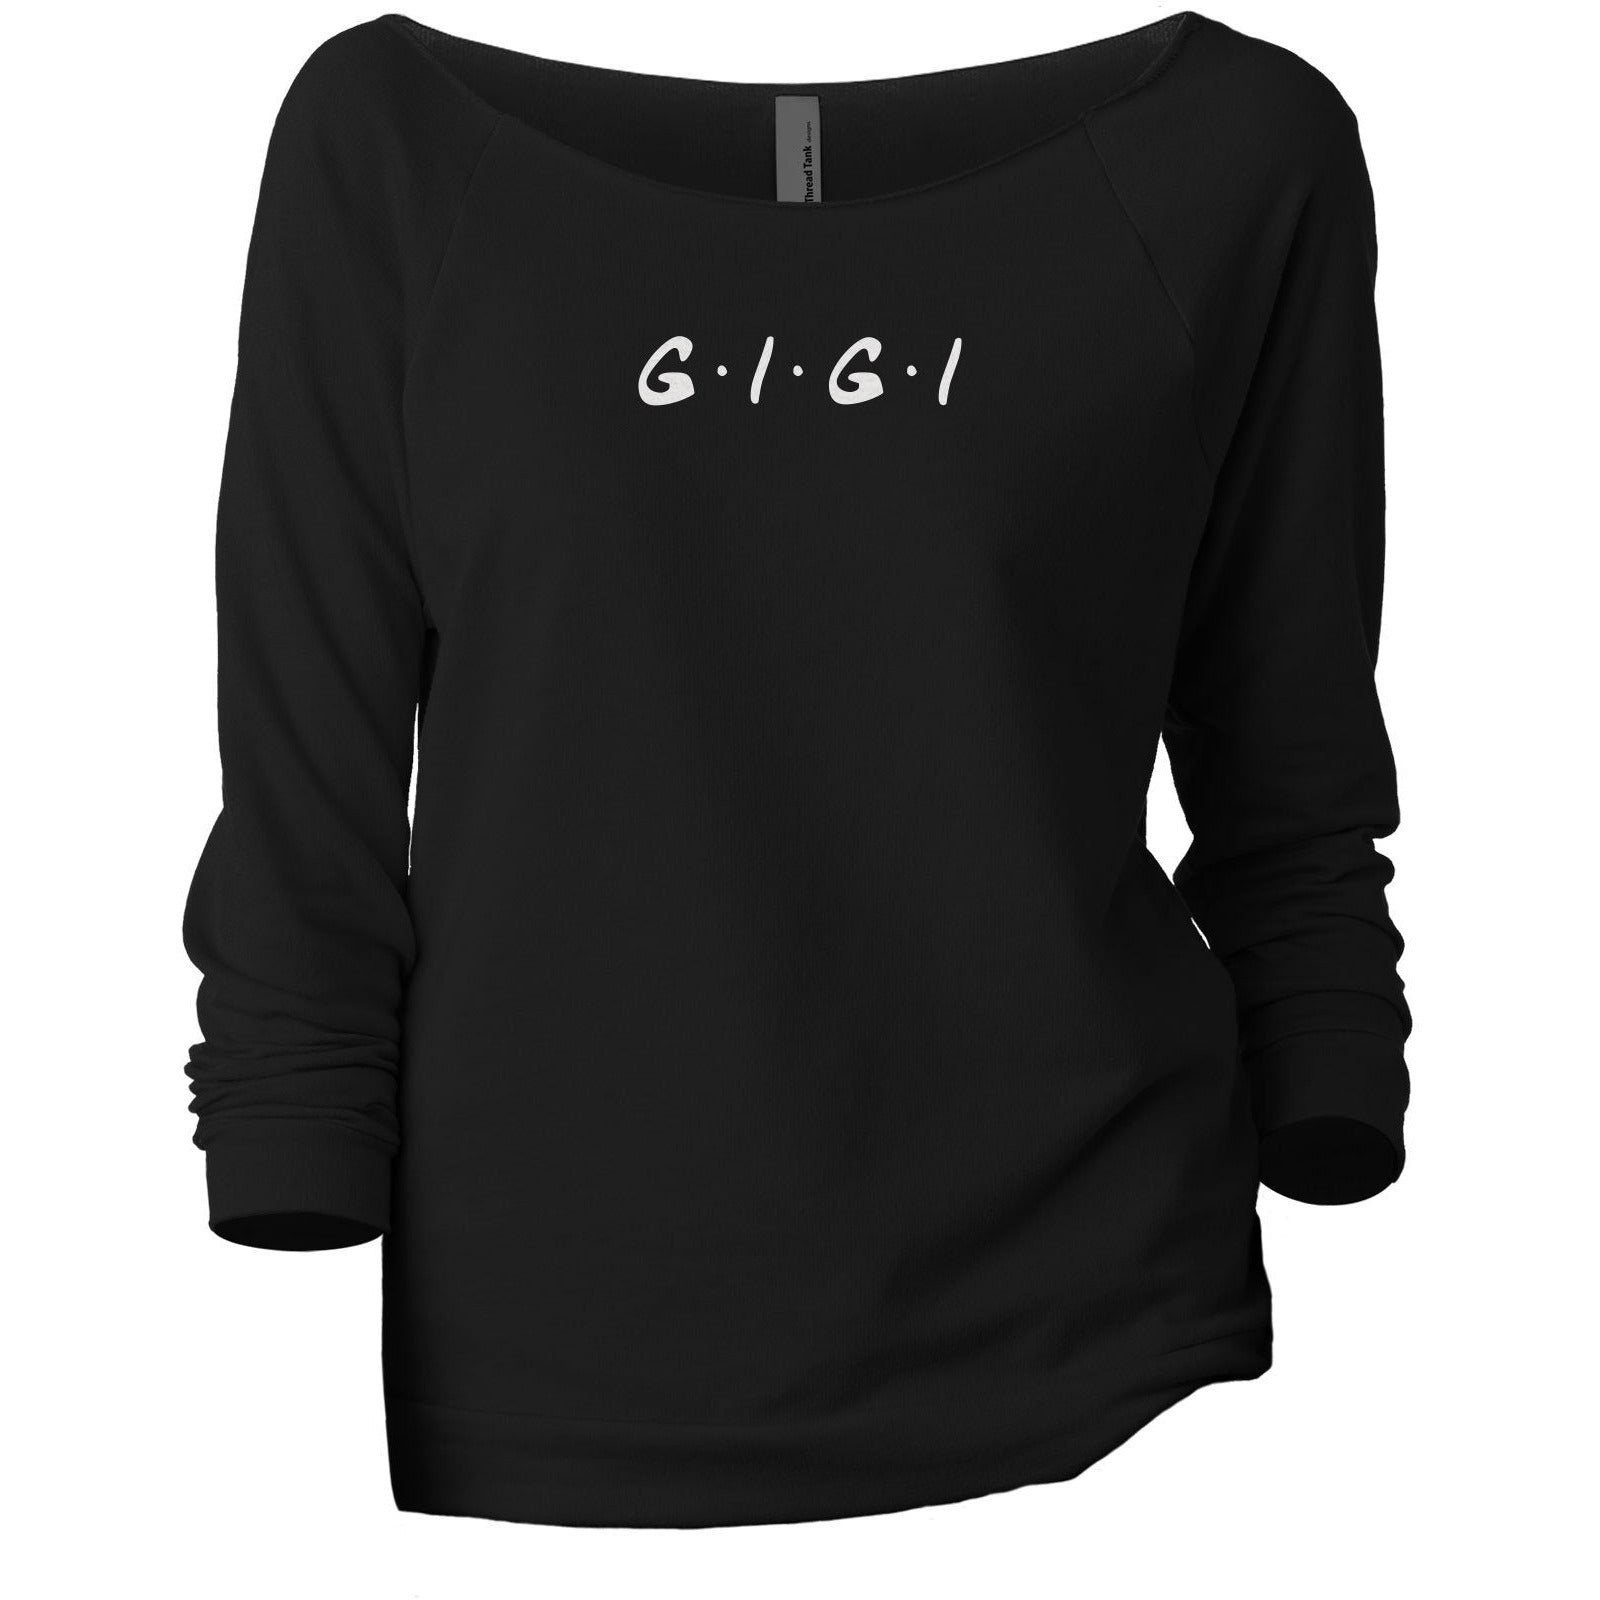 Gigi Friends Women's Graphic Printed Lightweight Slouchy 3/4 Sleeves Sweatshirt Sport Black